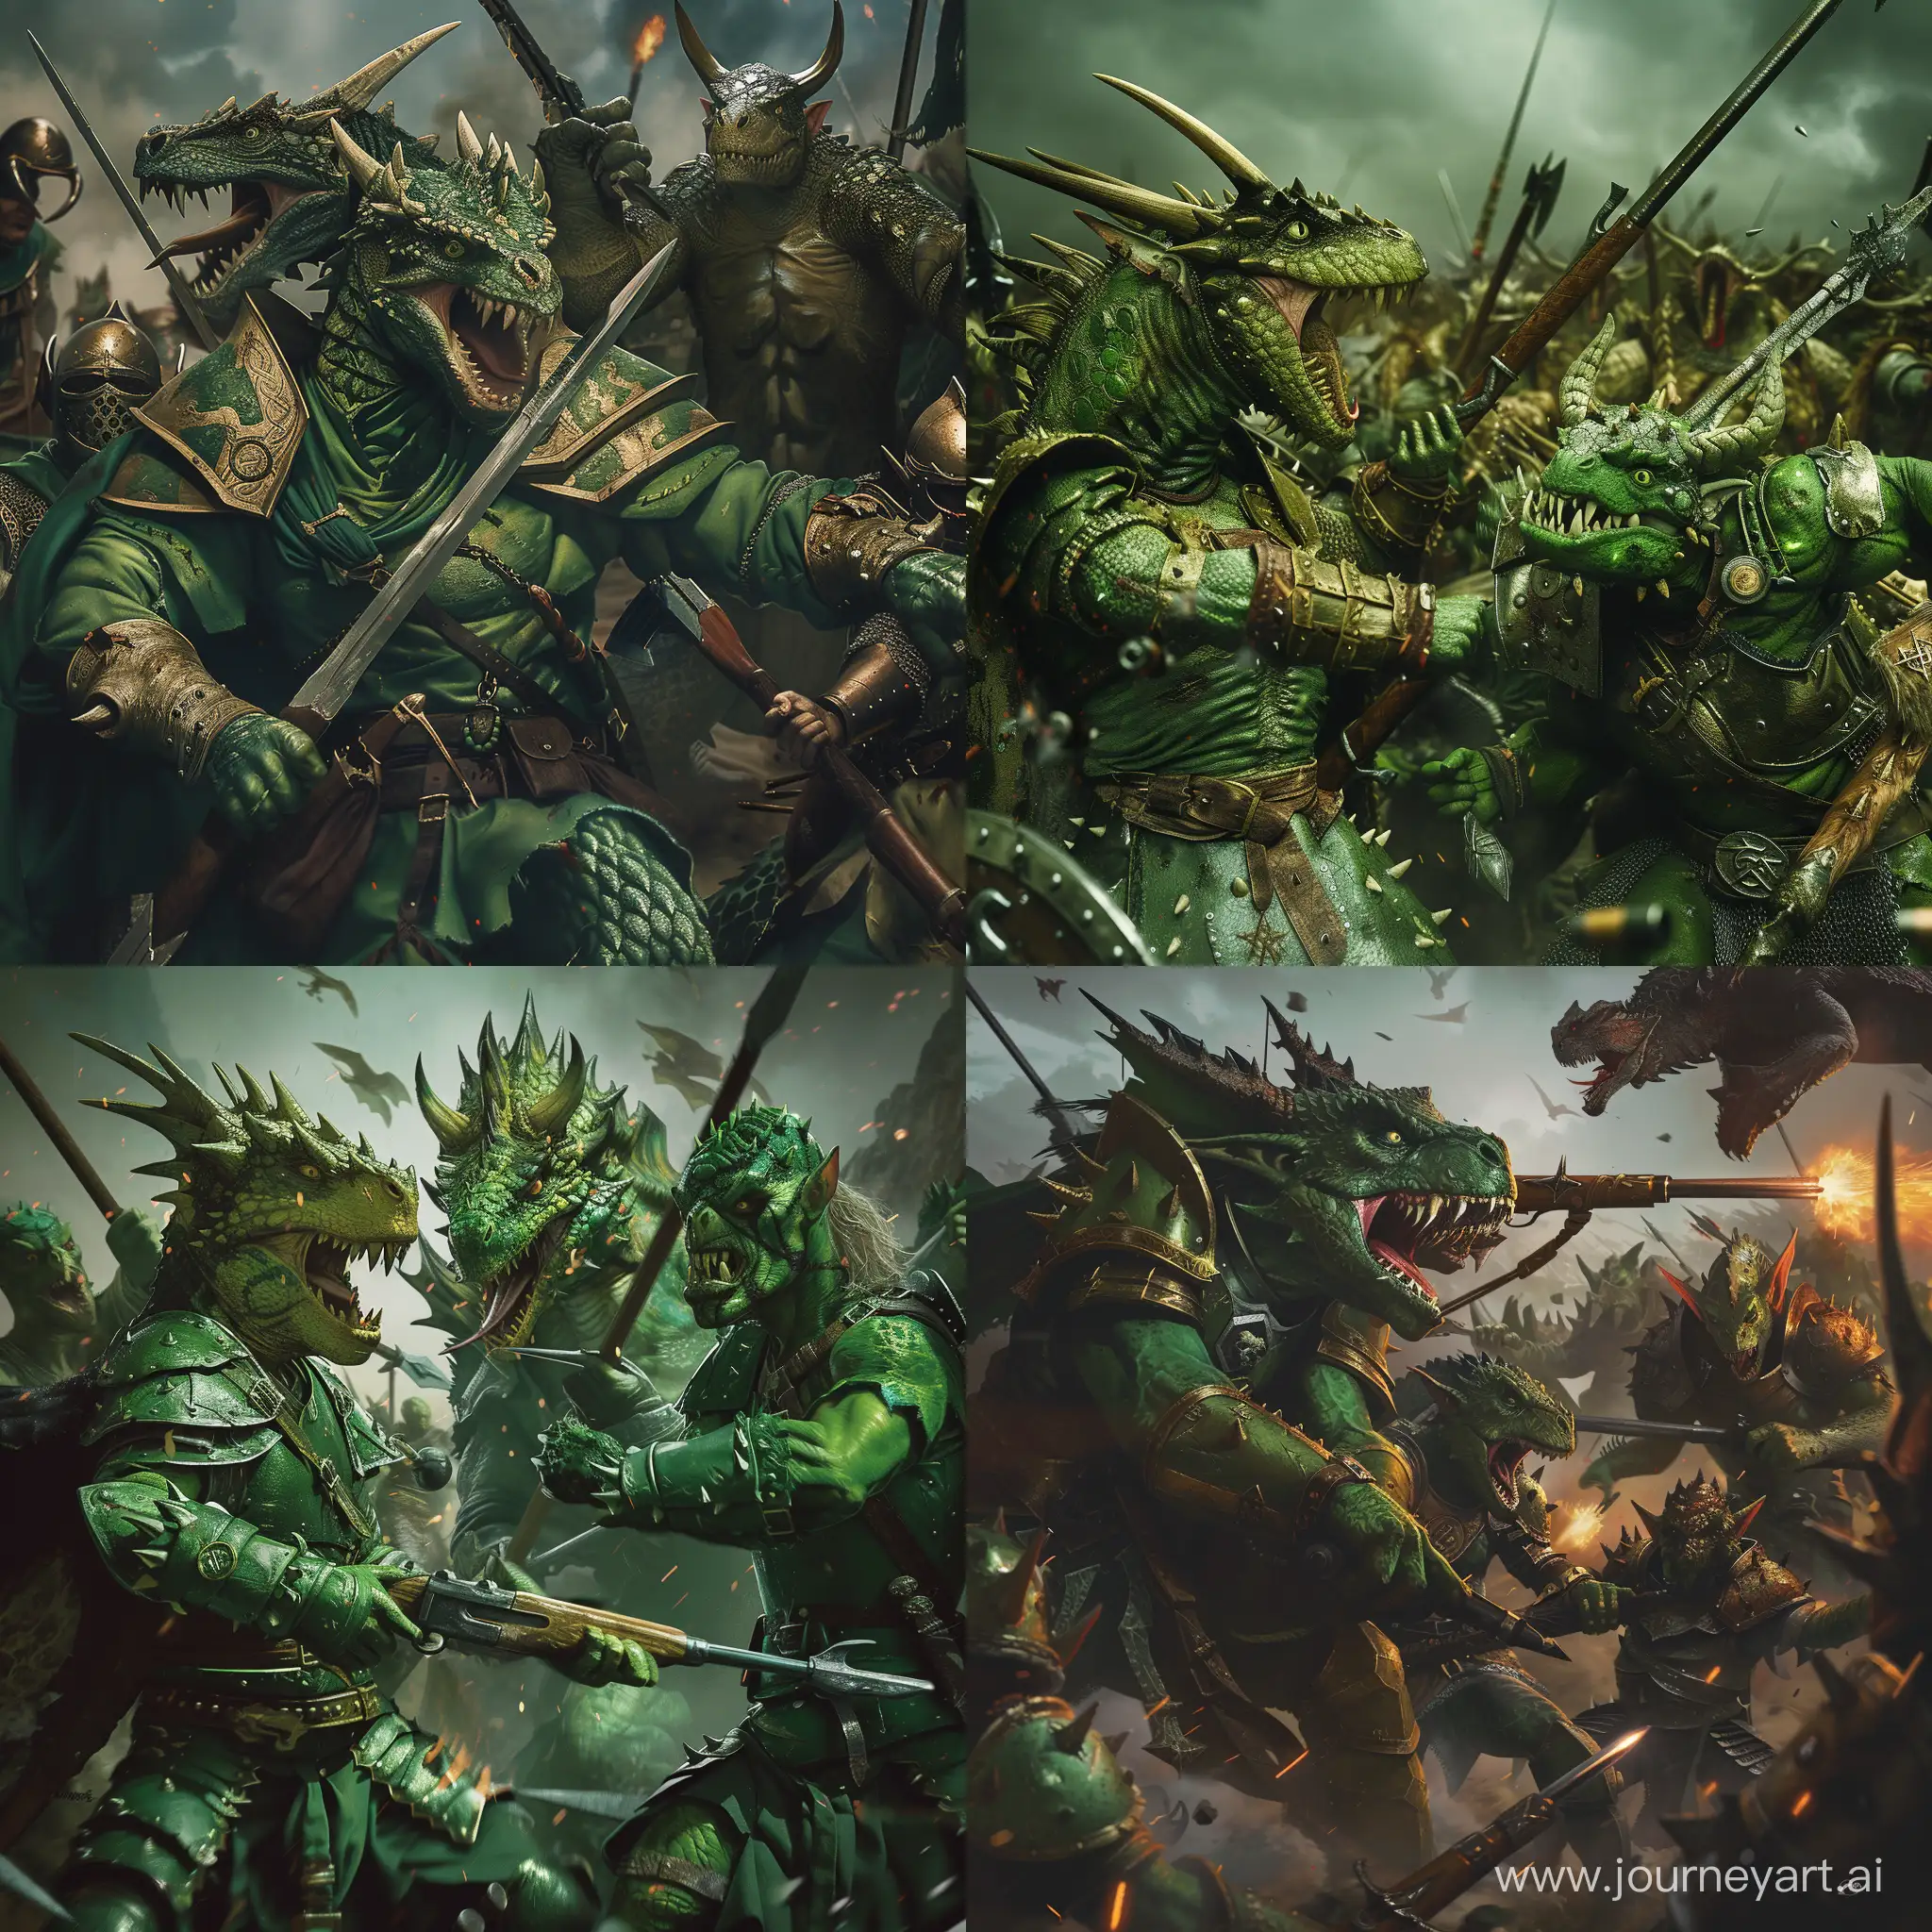 Epic-Battle-Between-Green-Orcs-and-Lizard-Warriors-with-Dragon-Head